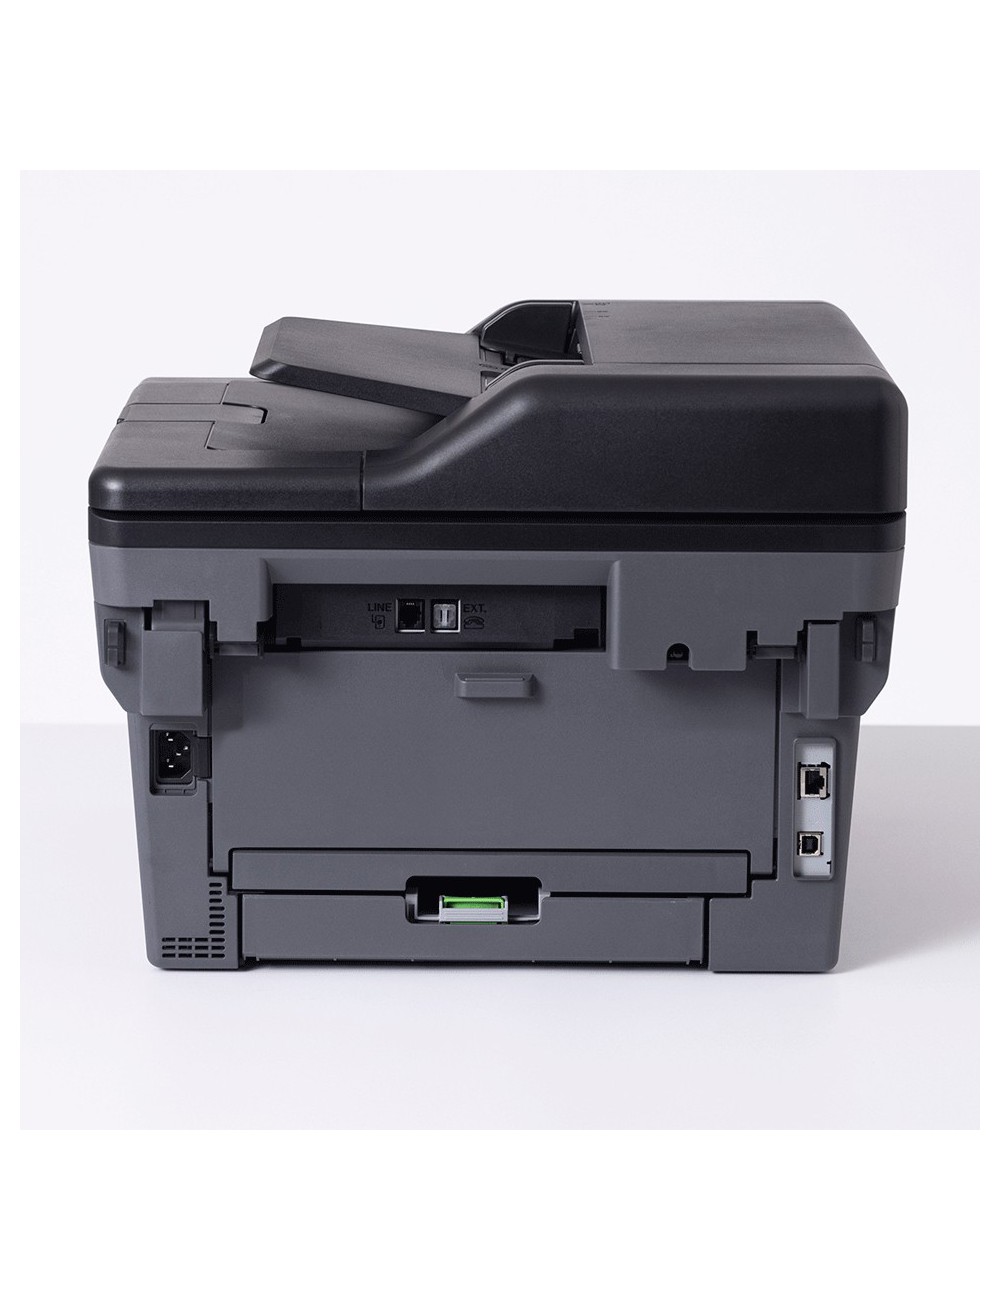 Brother MFC-L2800DW impresora multifunción Laser A4 1200 x 1200 DPI 32 ppm Wifi